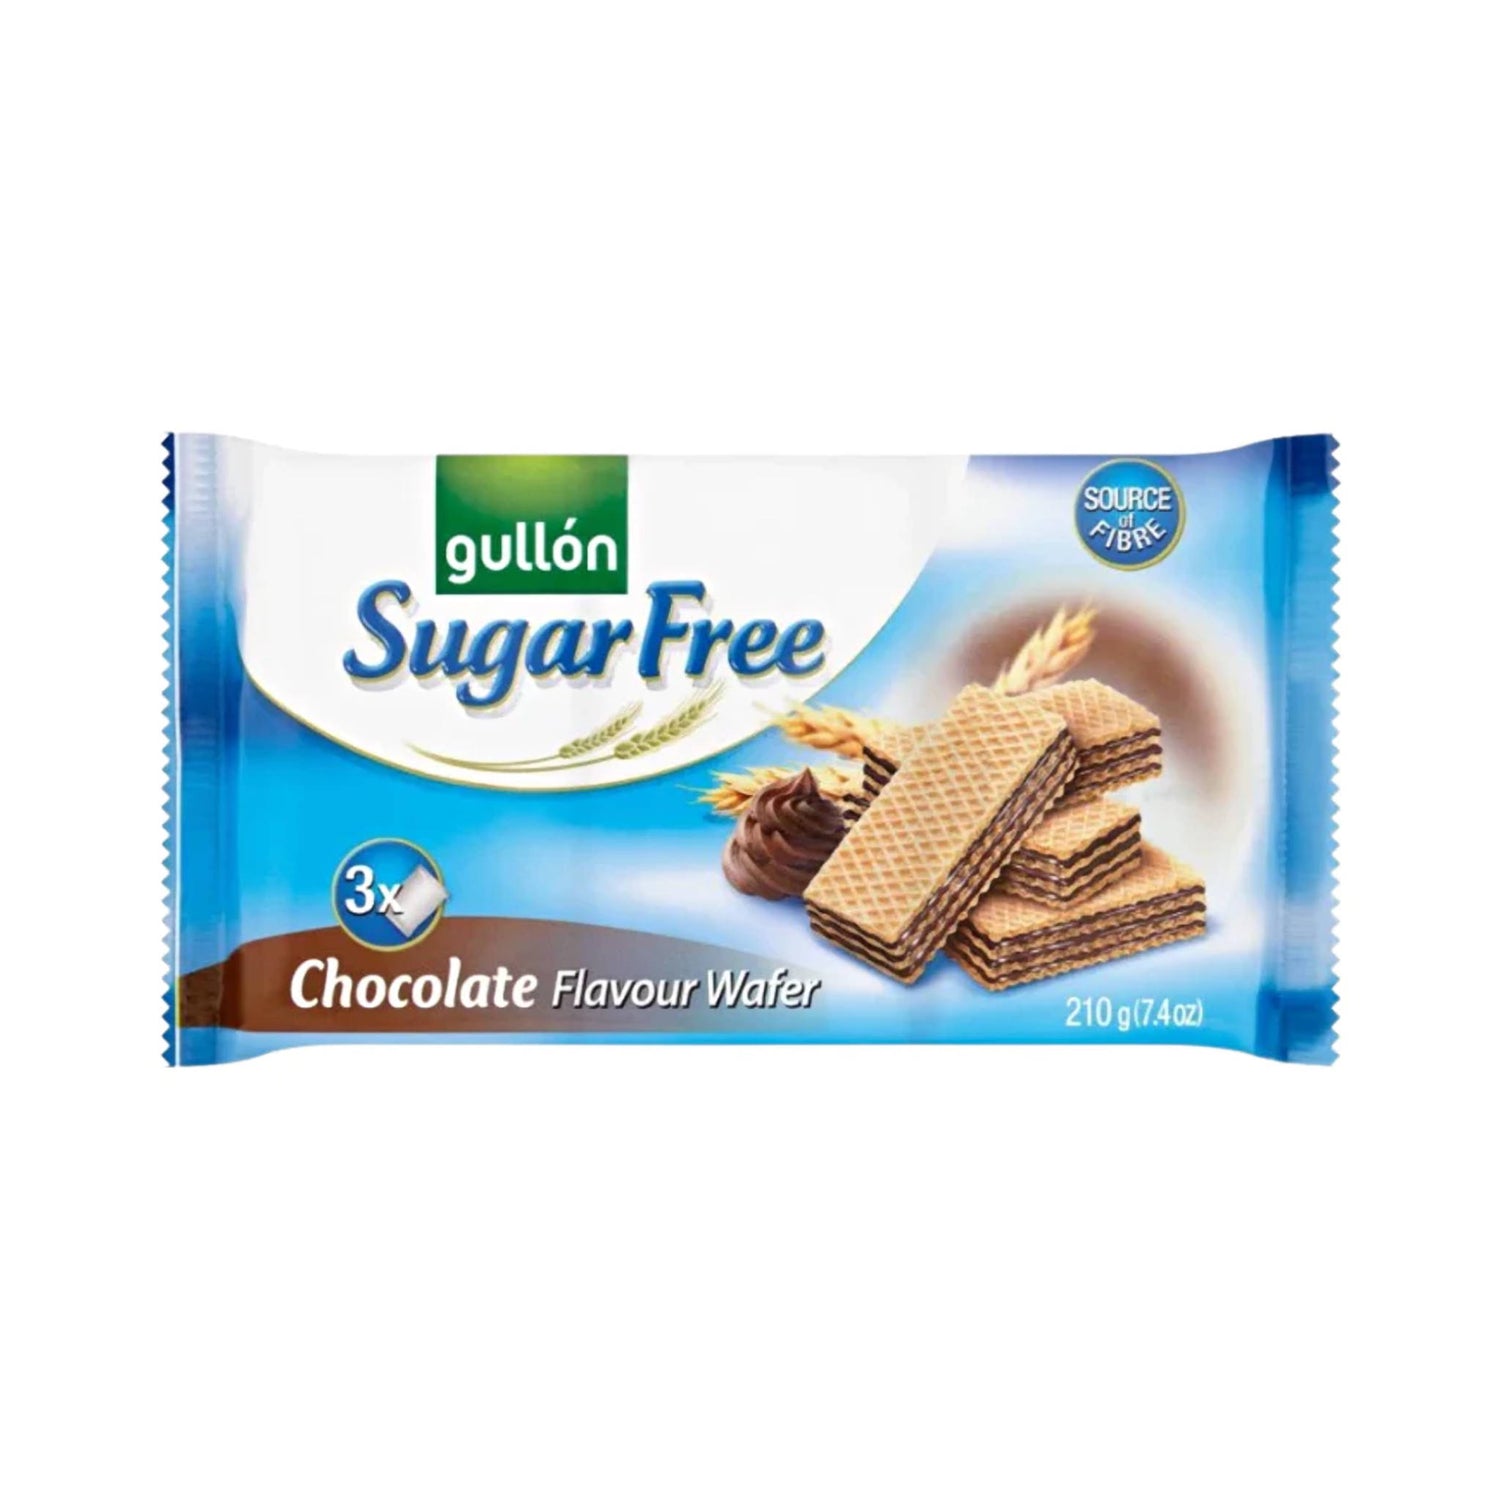 Gullon Sugar Free Chocolate Flavoured Wafer 210g